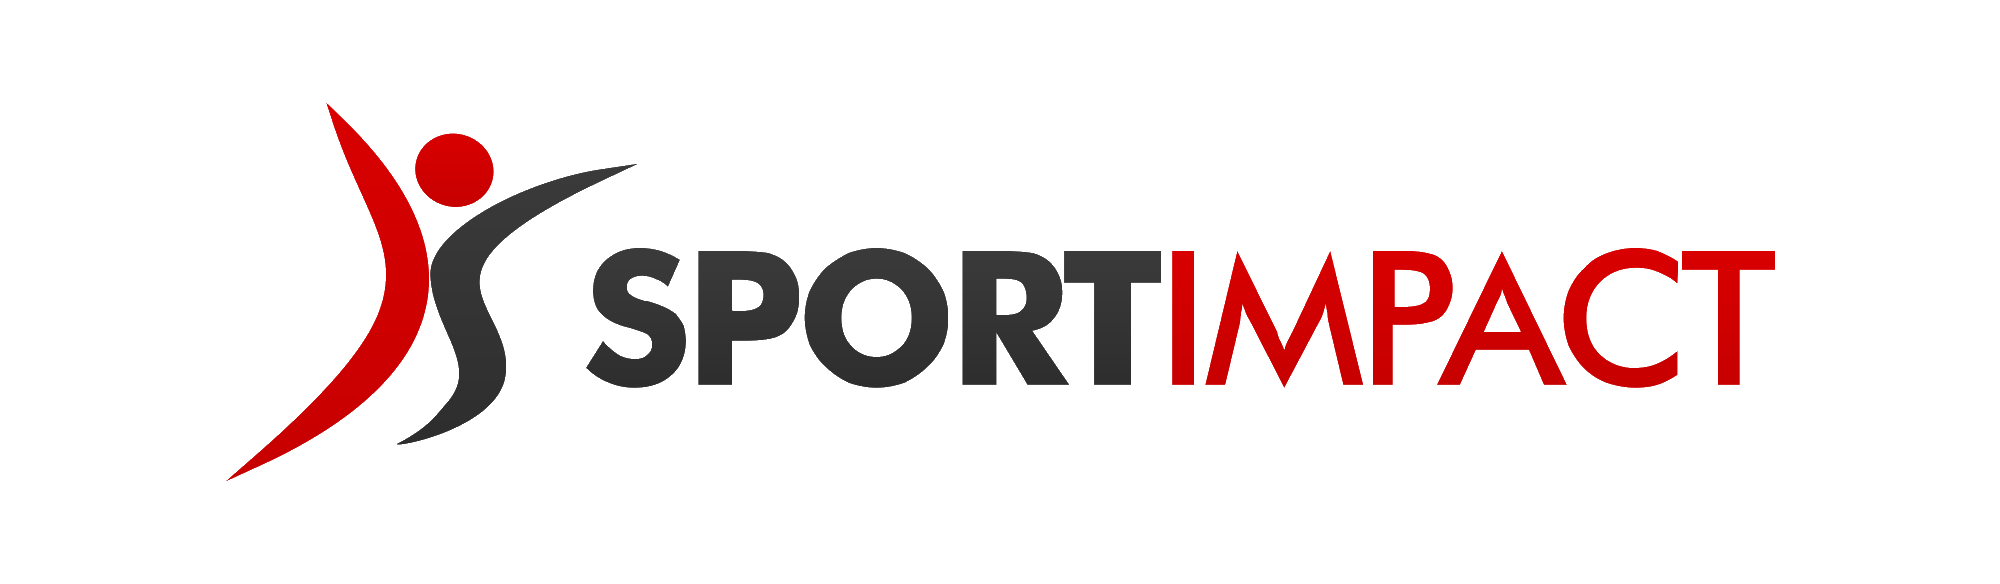 logo-sportimpact_large_transp